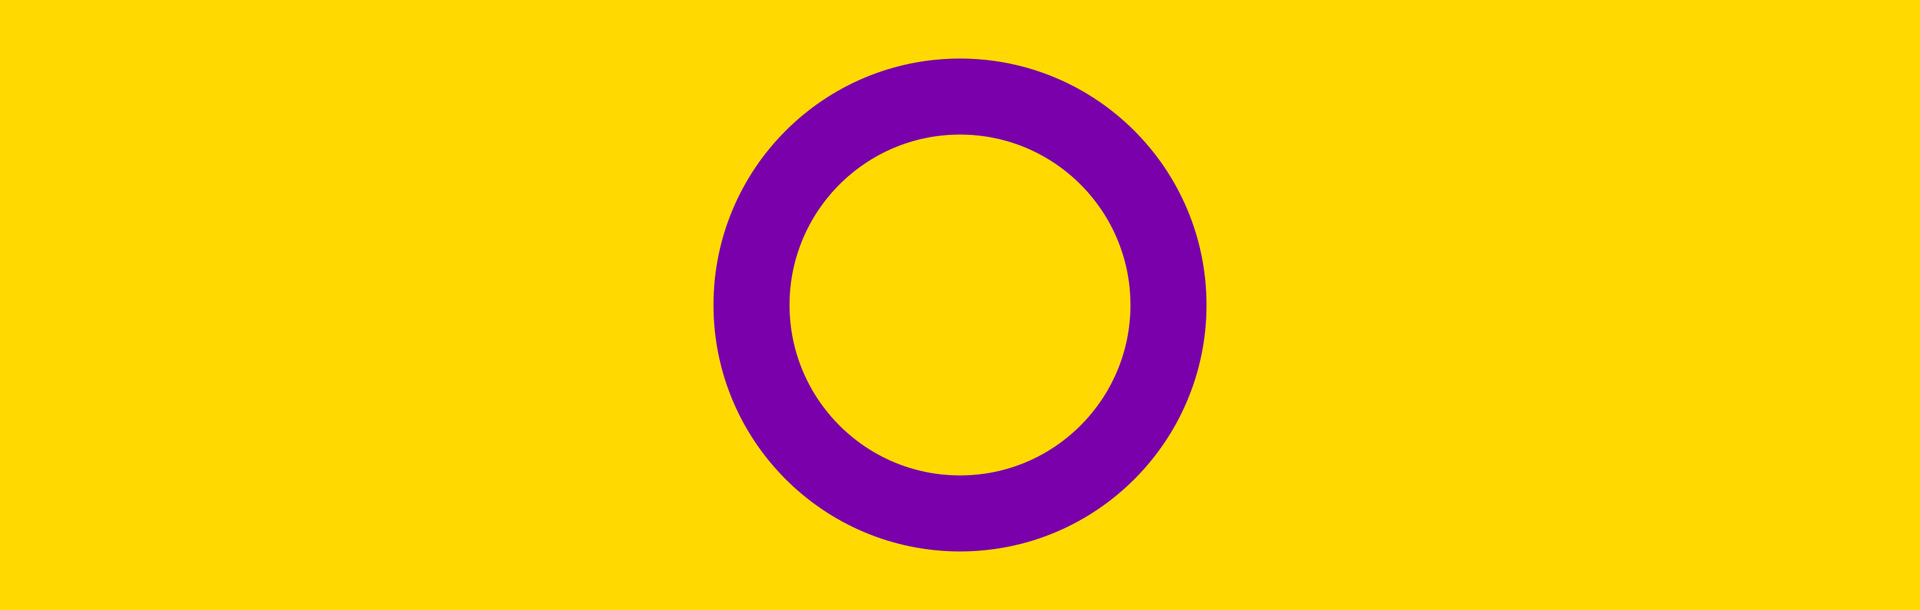 Pozývam ťa (nielen) na workshop o intersexualite